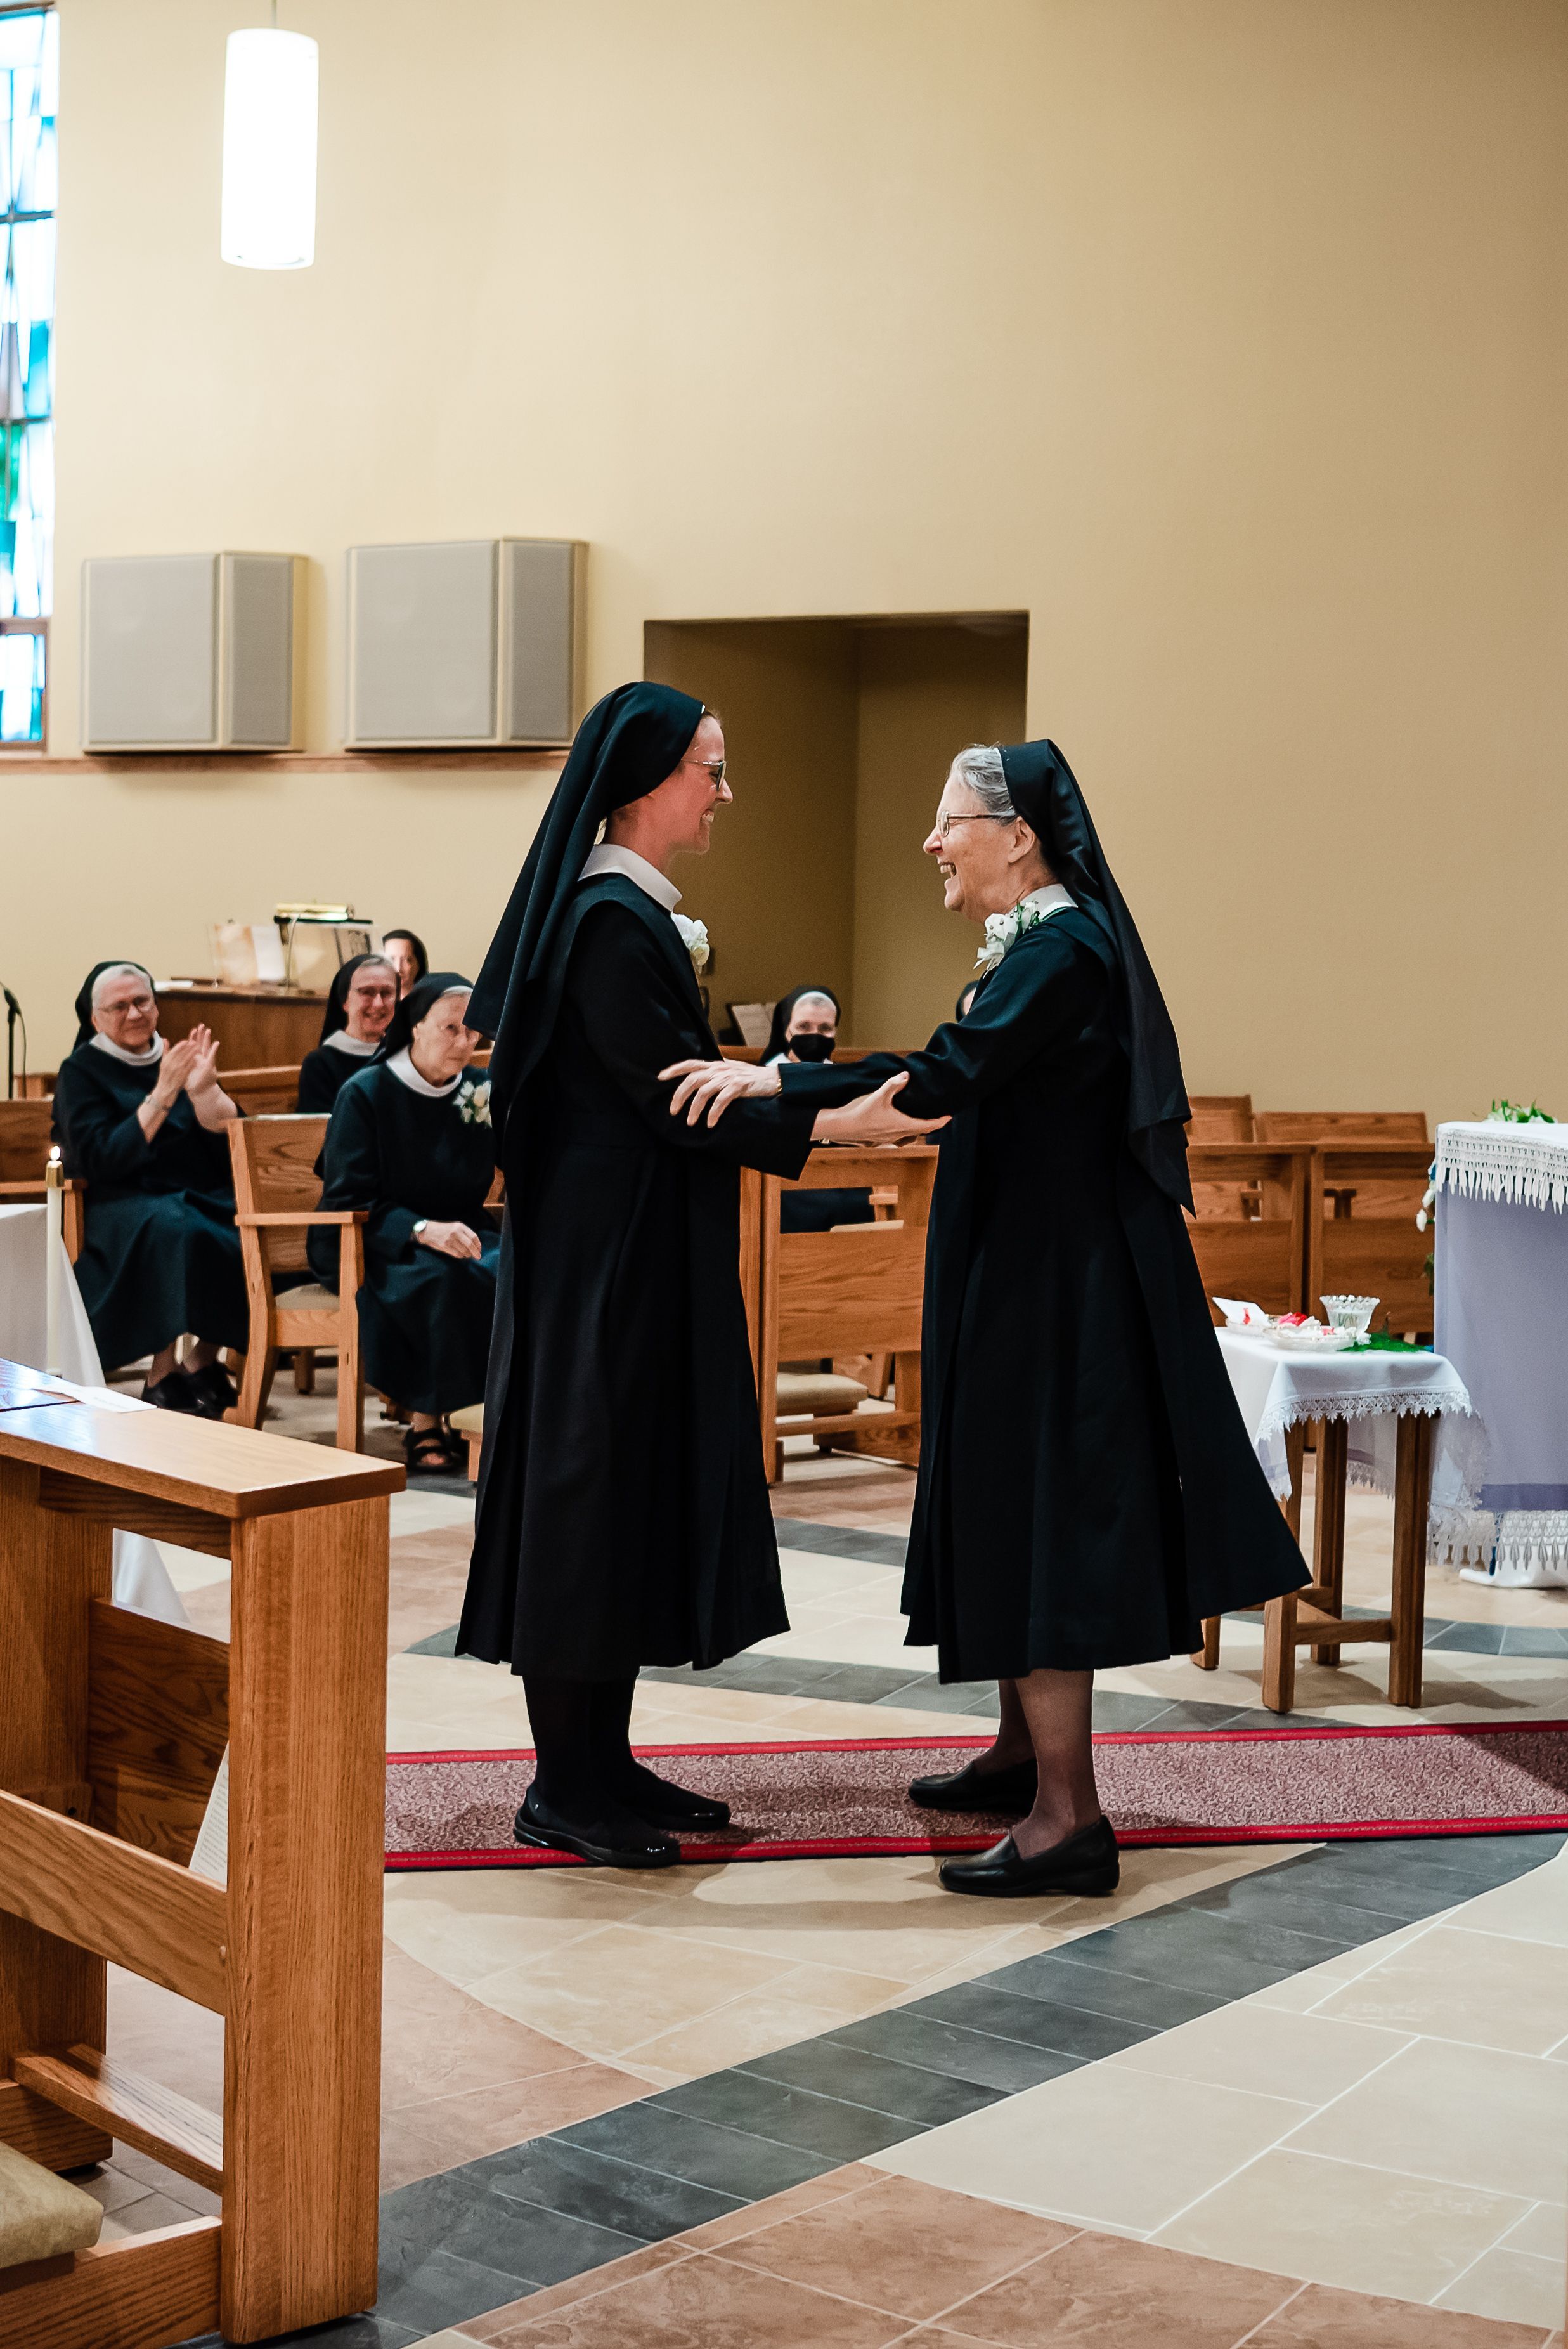 Becoming a Benedictine Sister